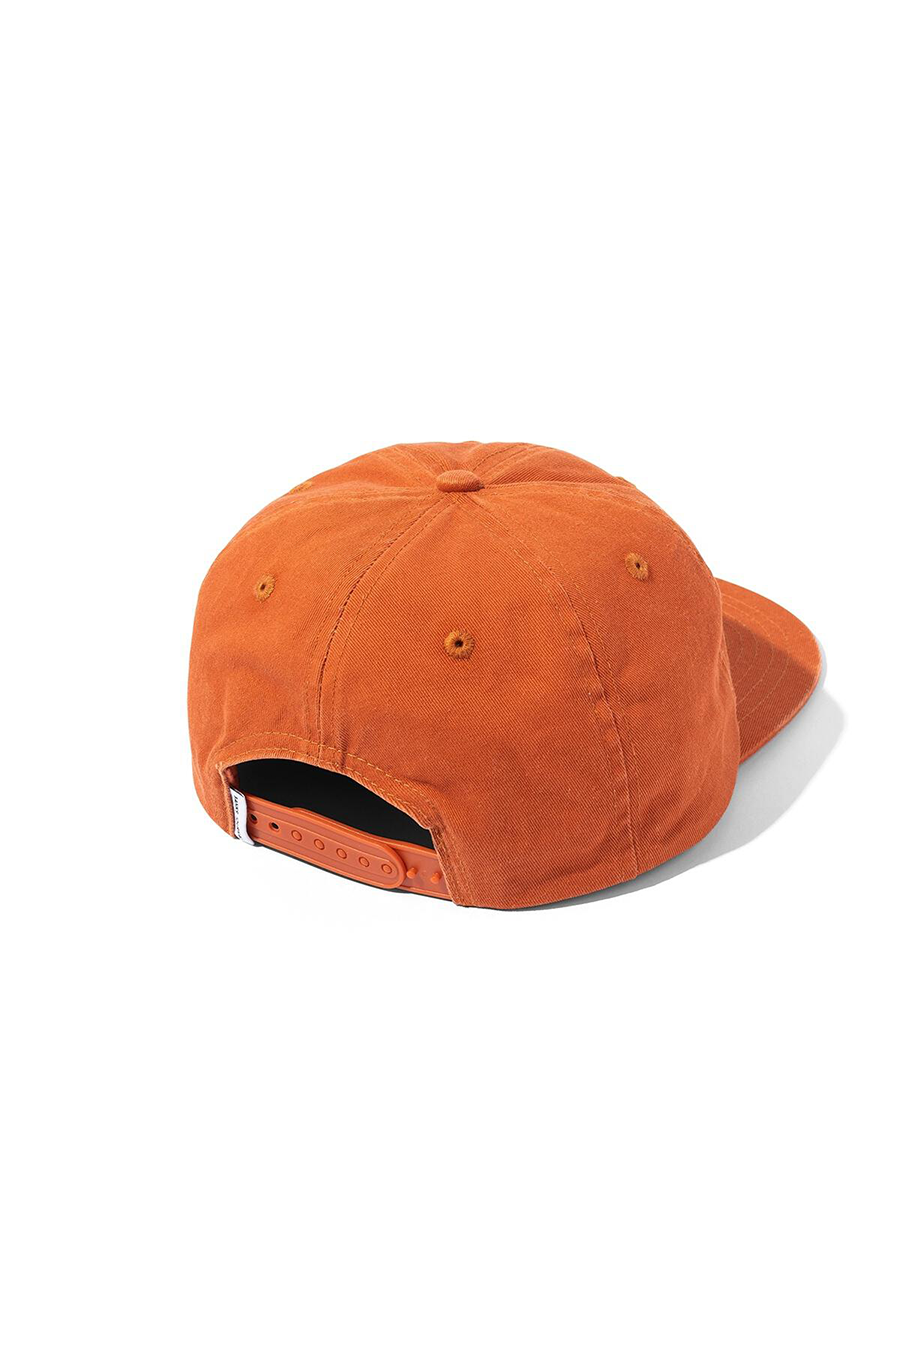 Label Hat | Dark Amber - Main Image Number 2 of 2